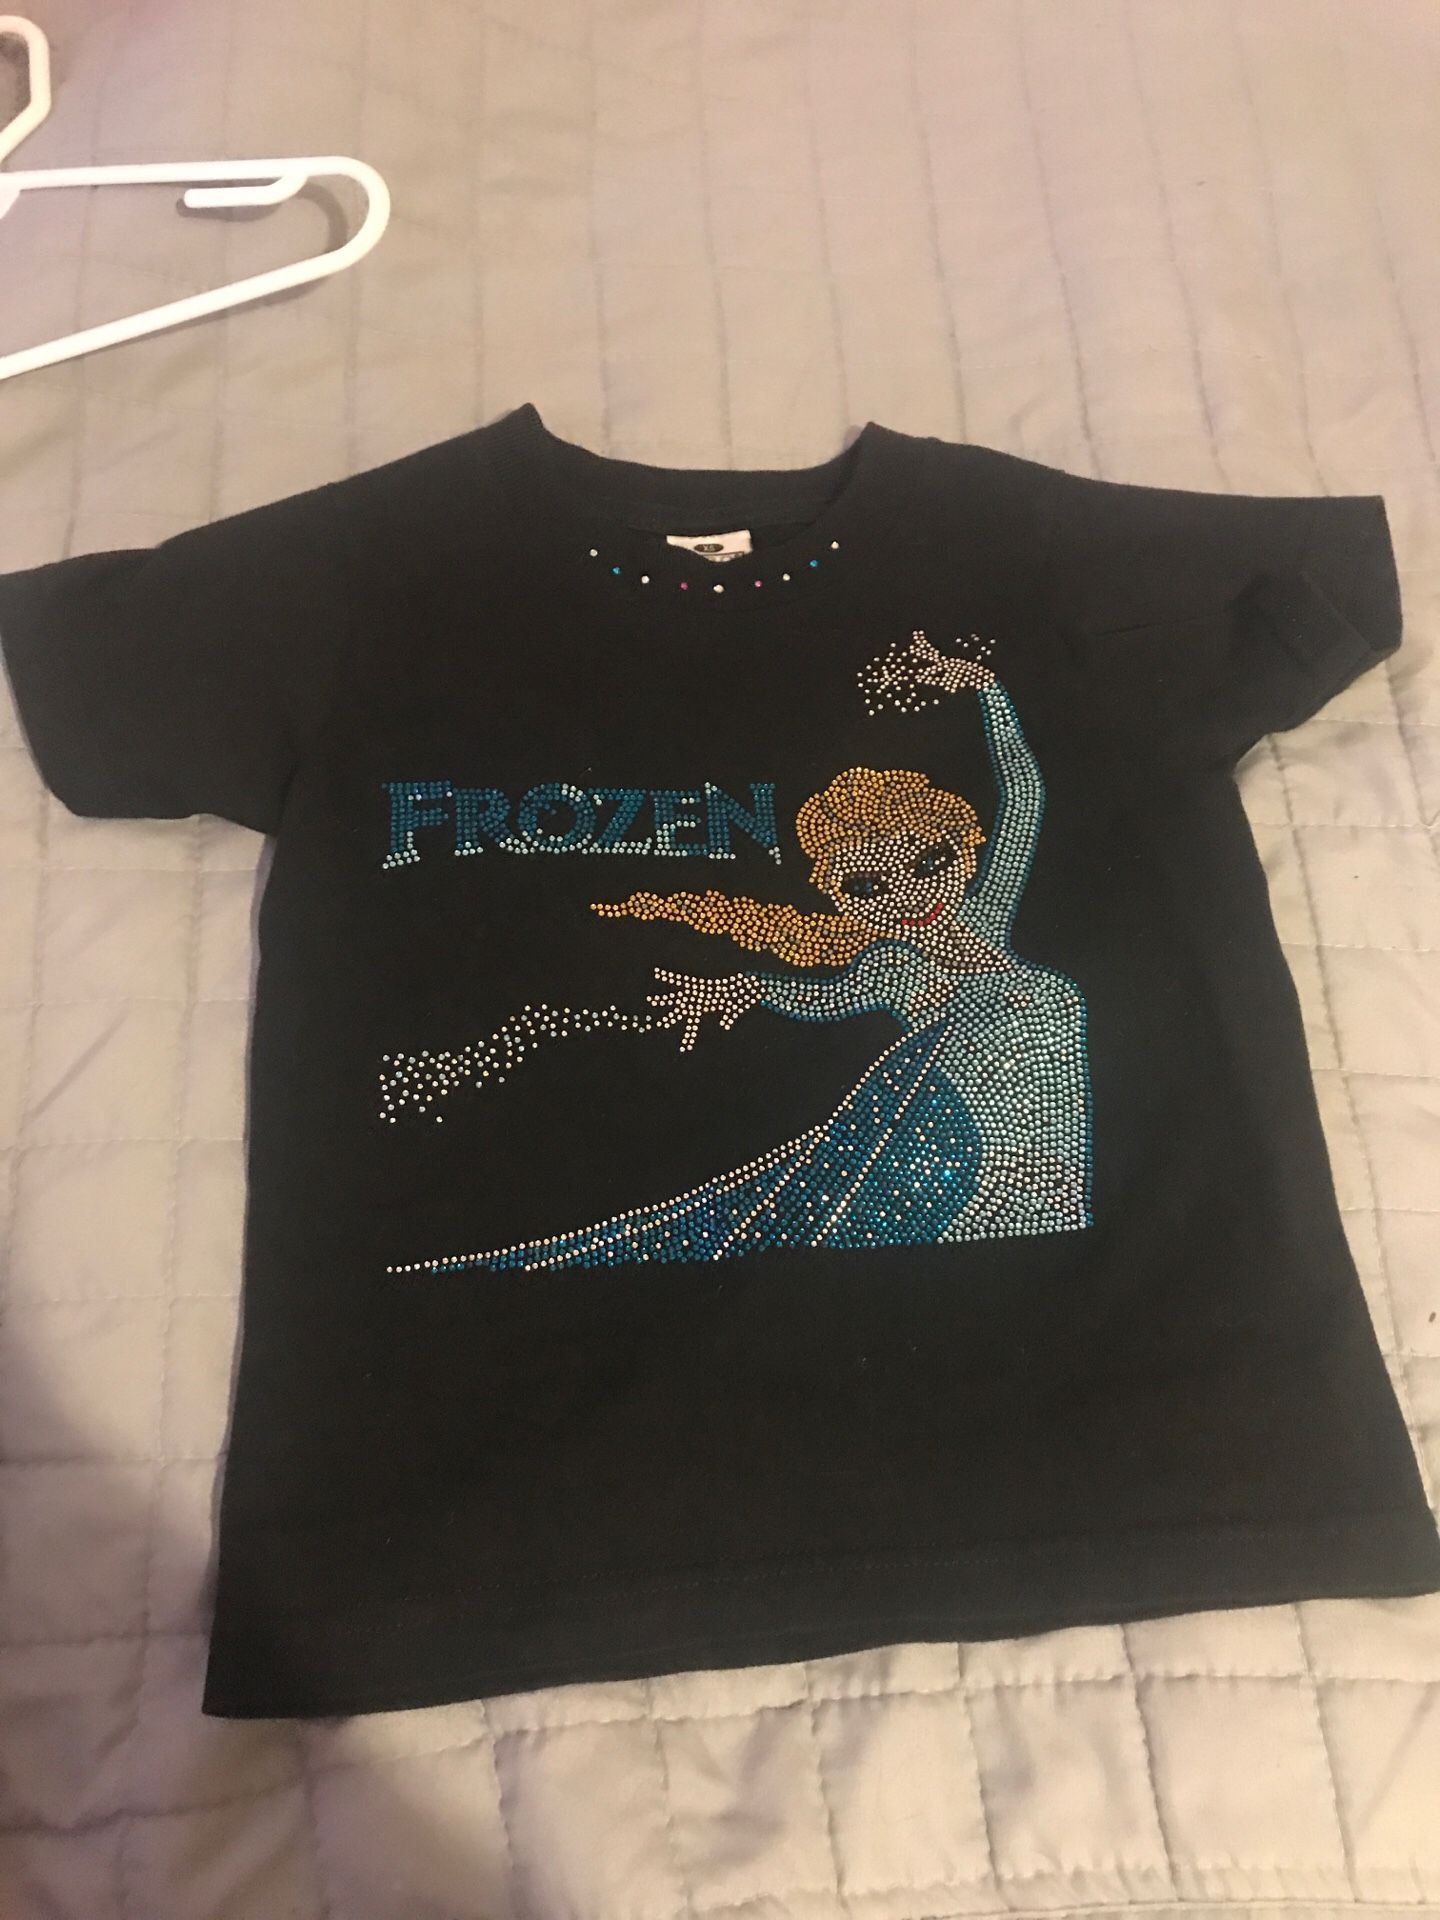 Elsa frozen black shirt custom